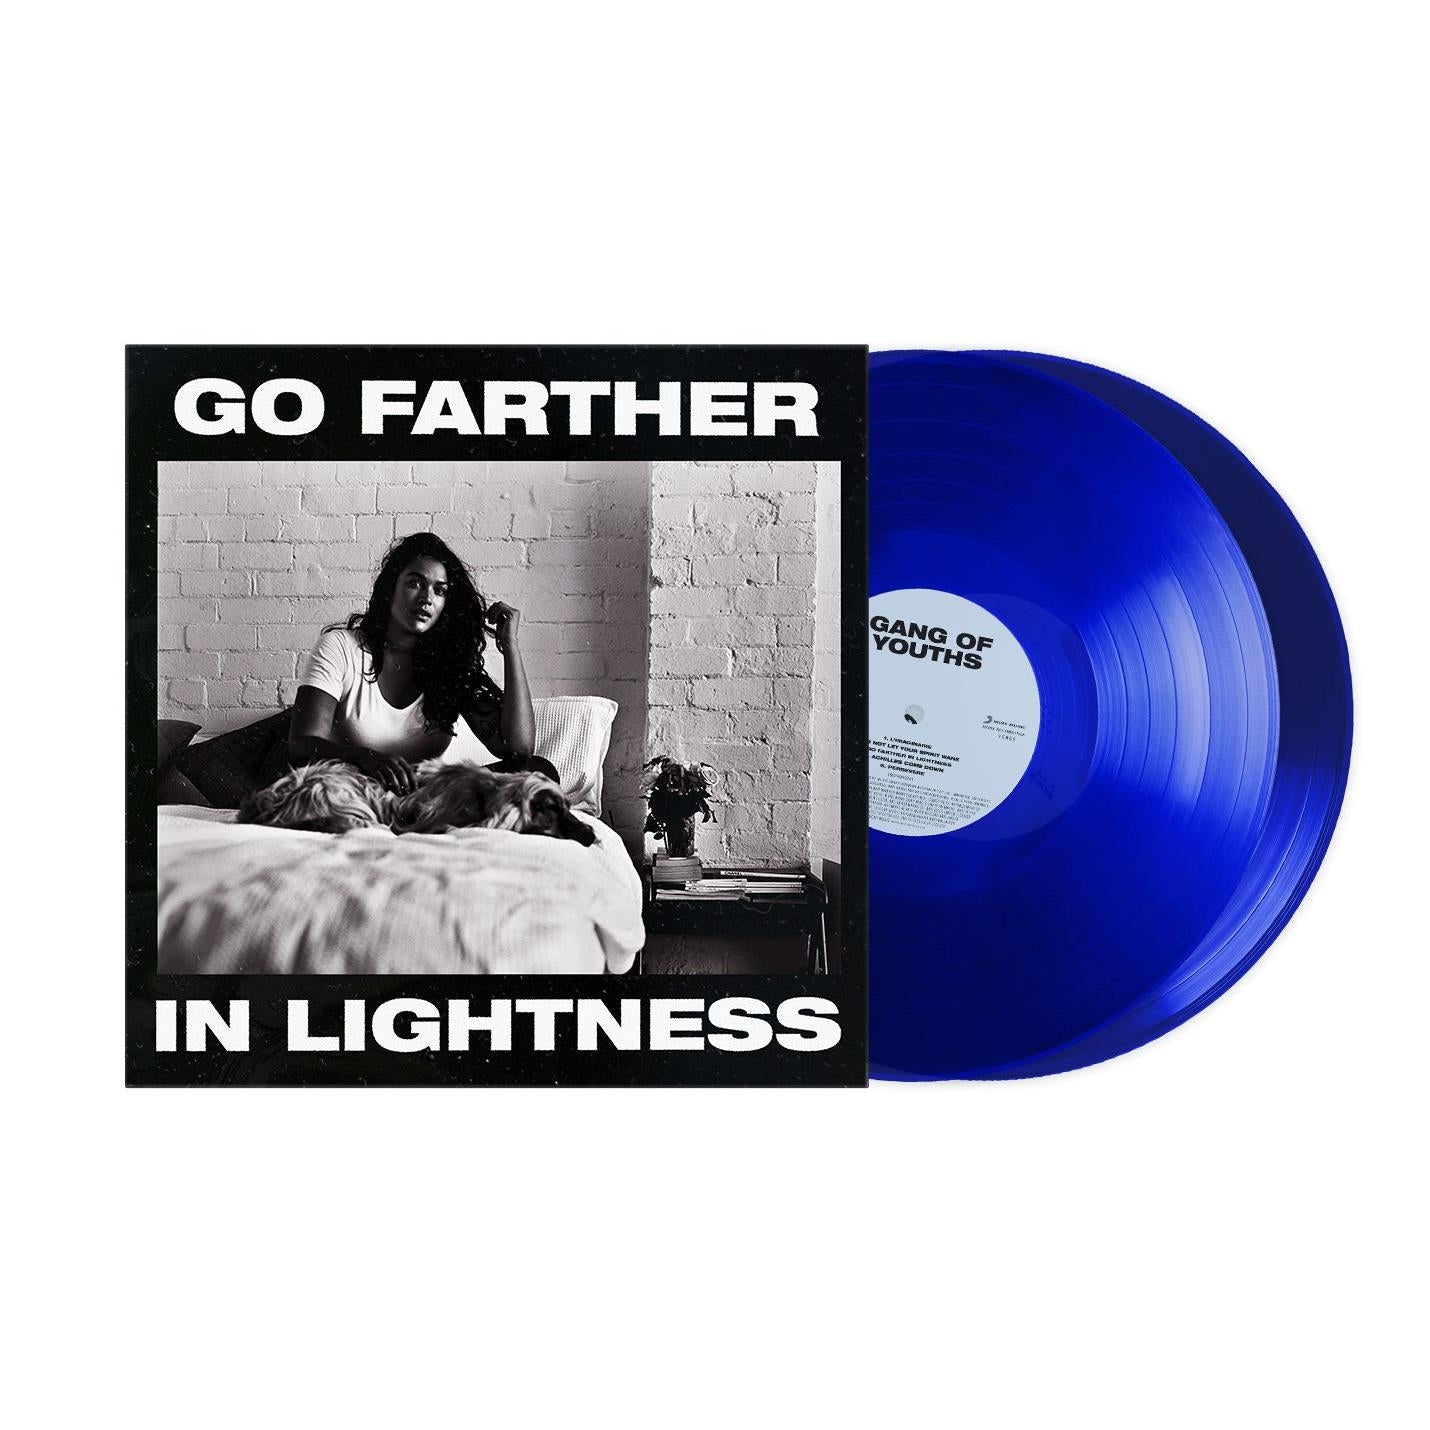 go father in lightnesss (royal blue vinyl)